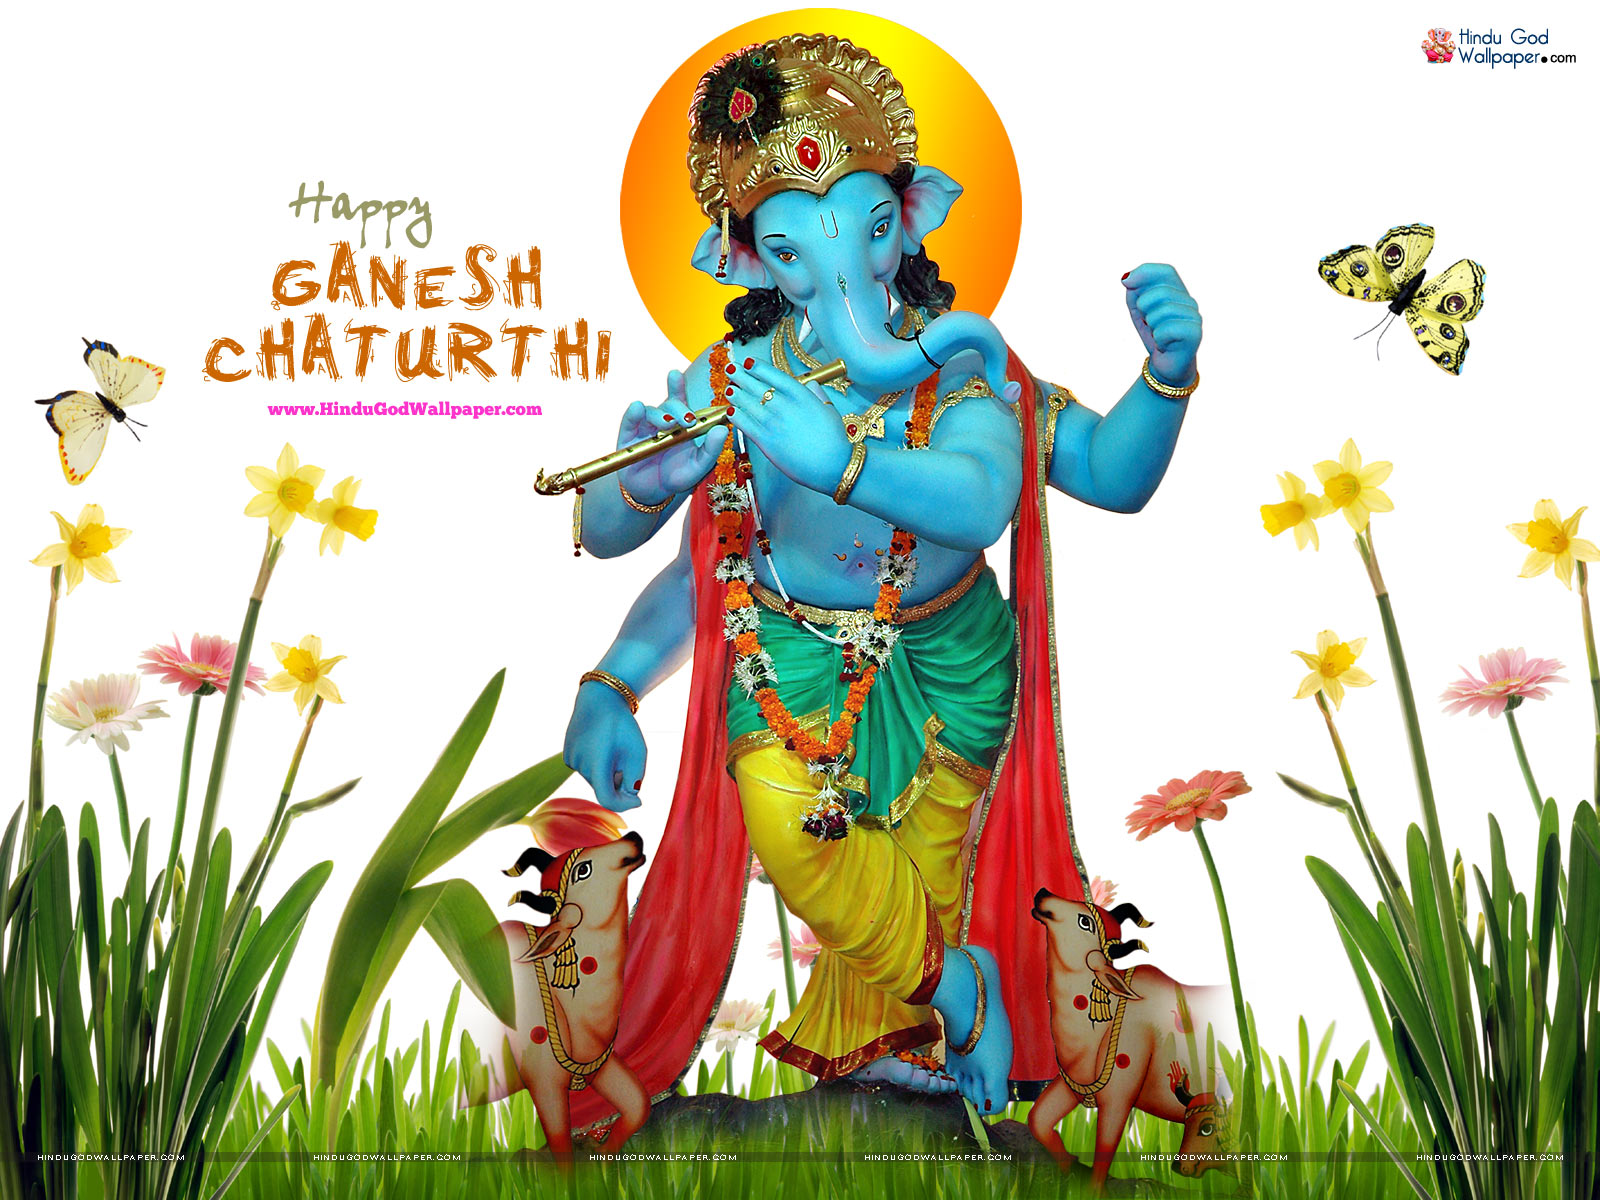 Ganesh Chaturthi Live HD Wallpapers Free Download